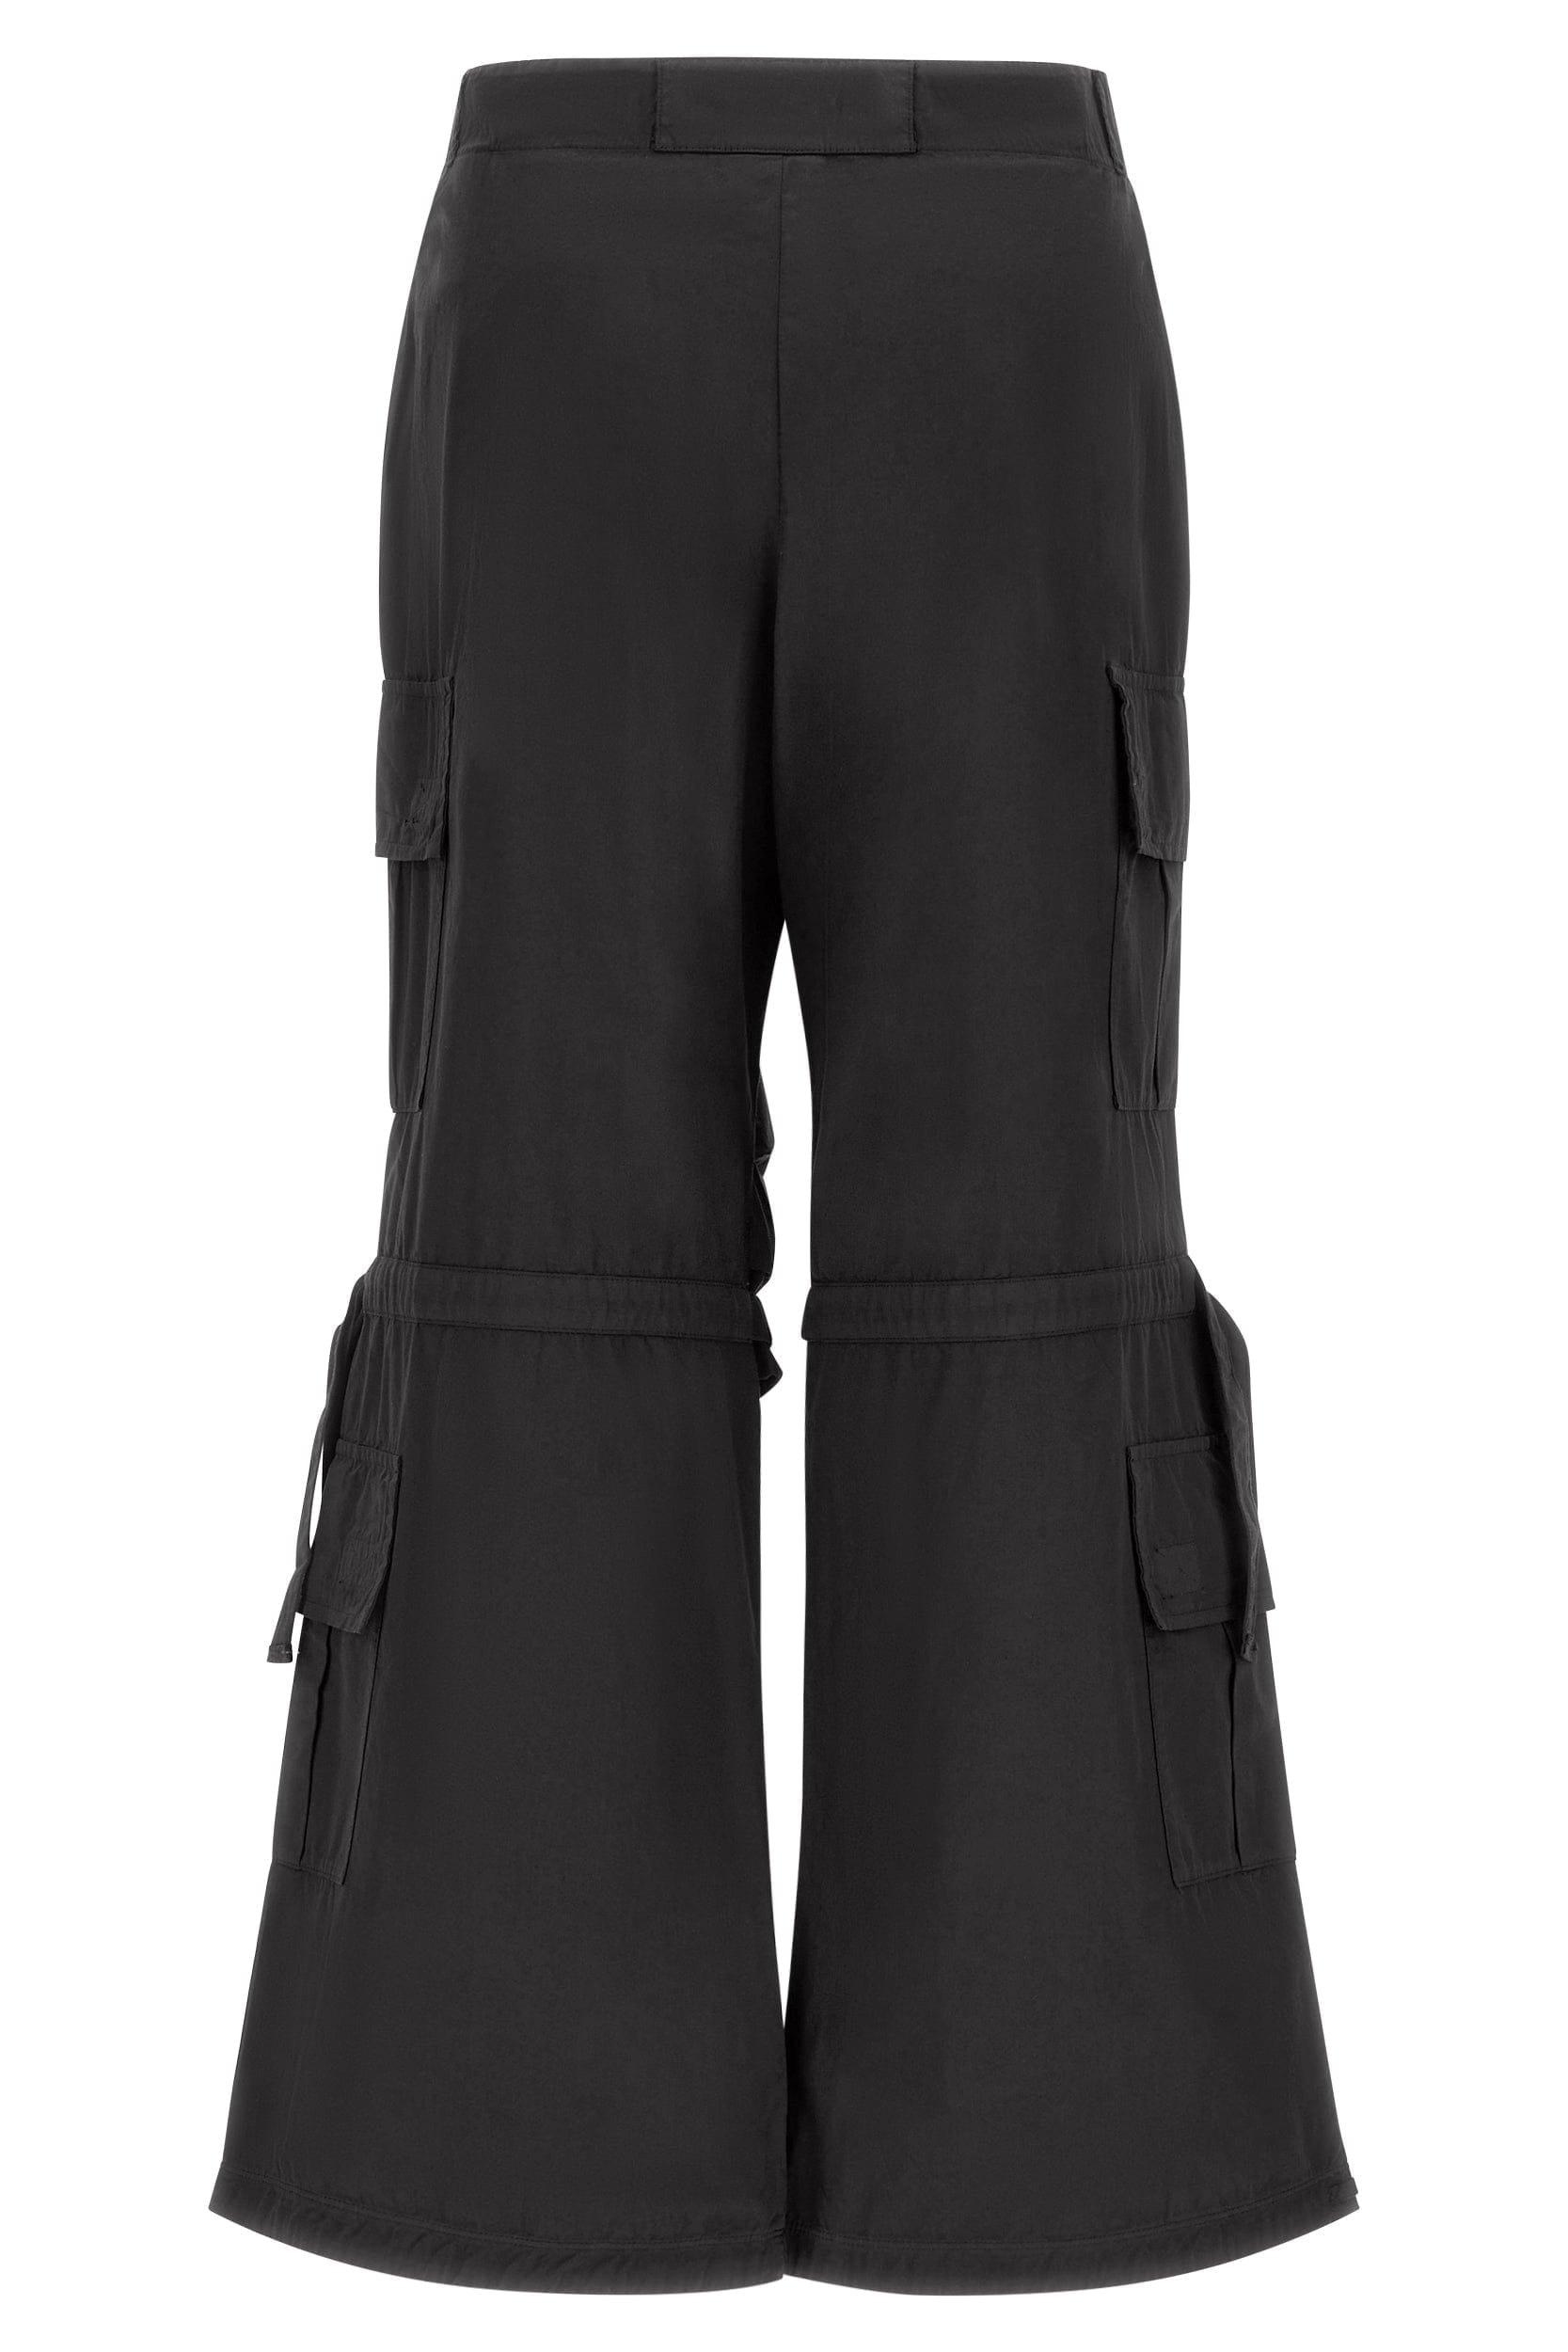 Cargo Pants - High Waisted - Full Length - Black 9